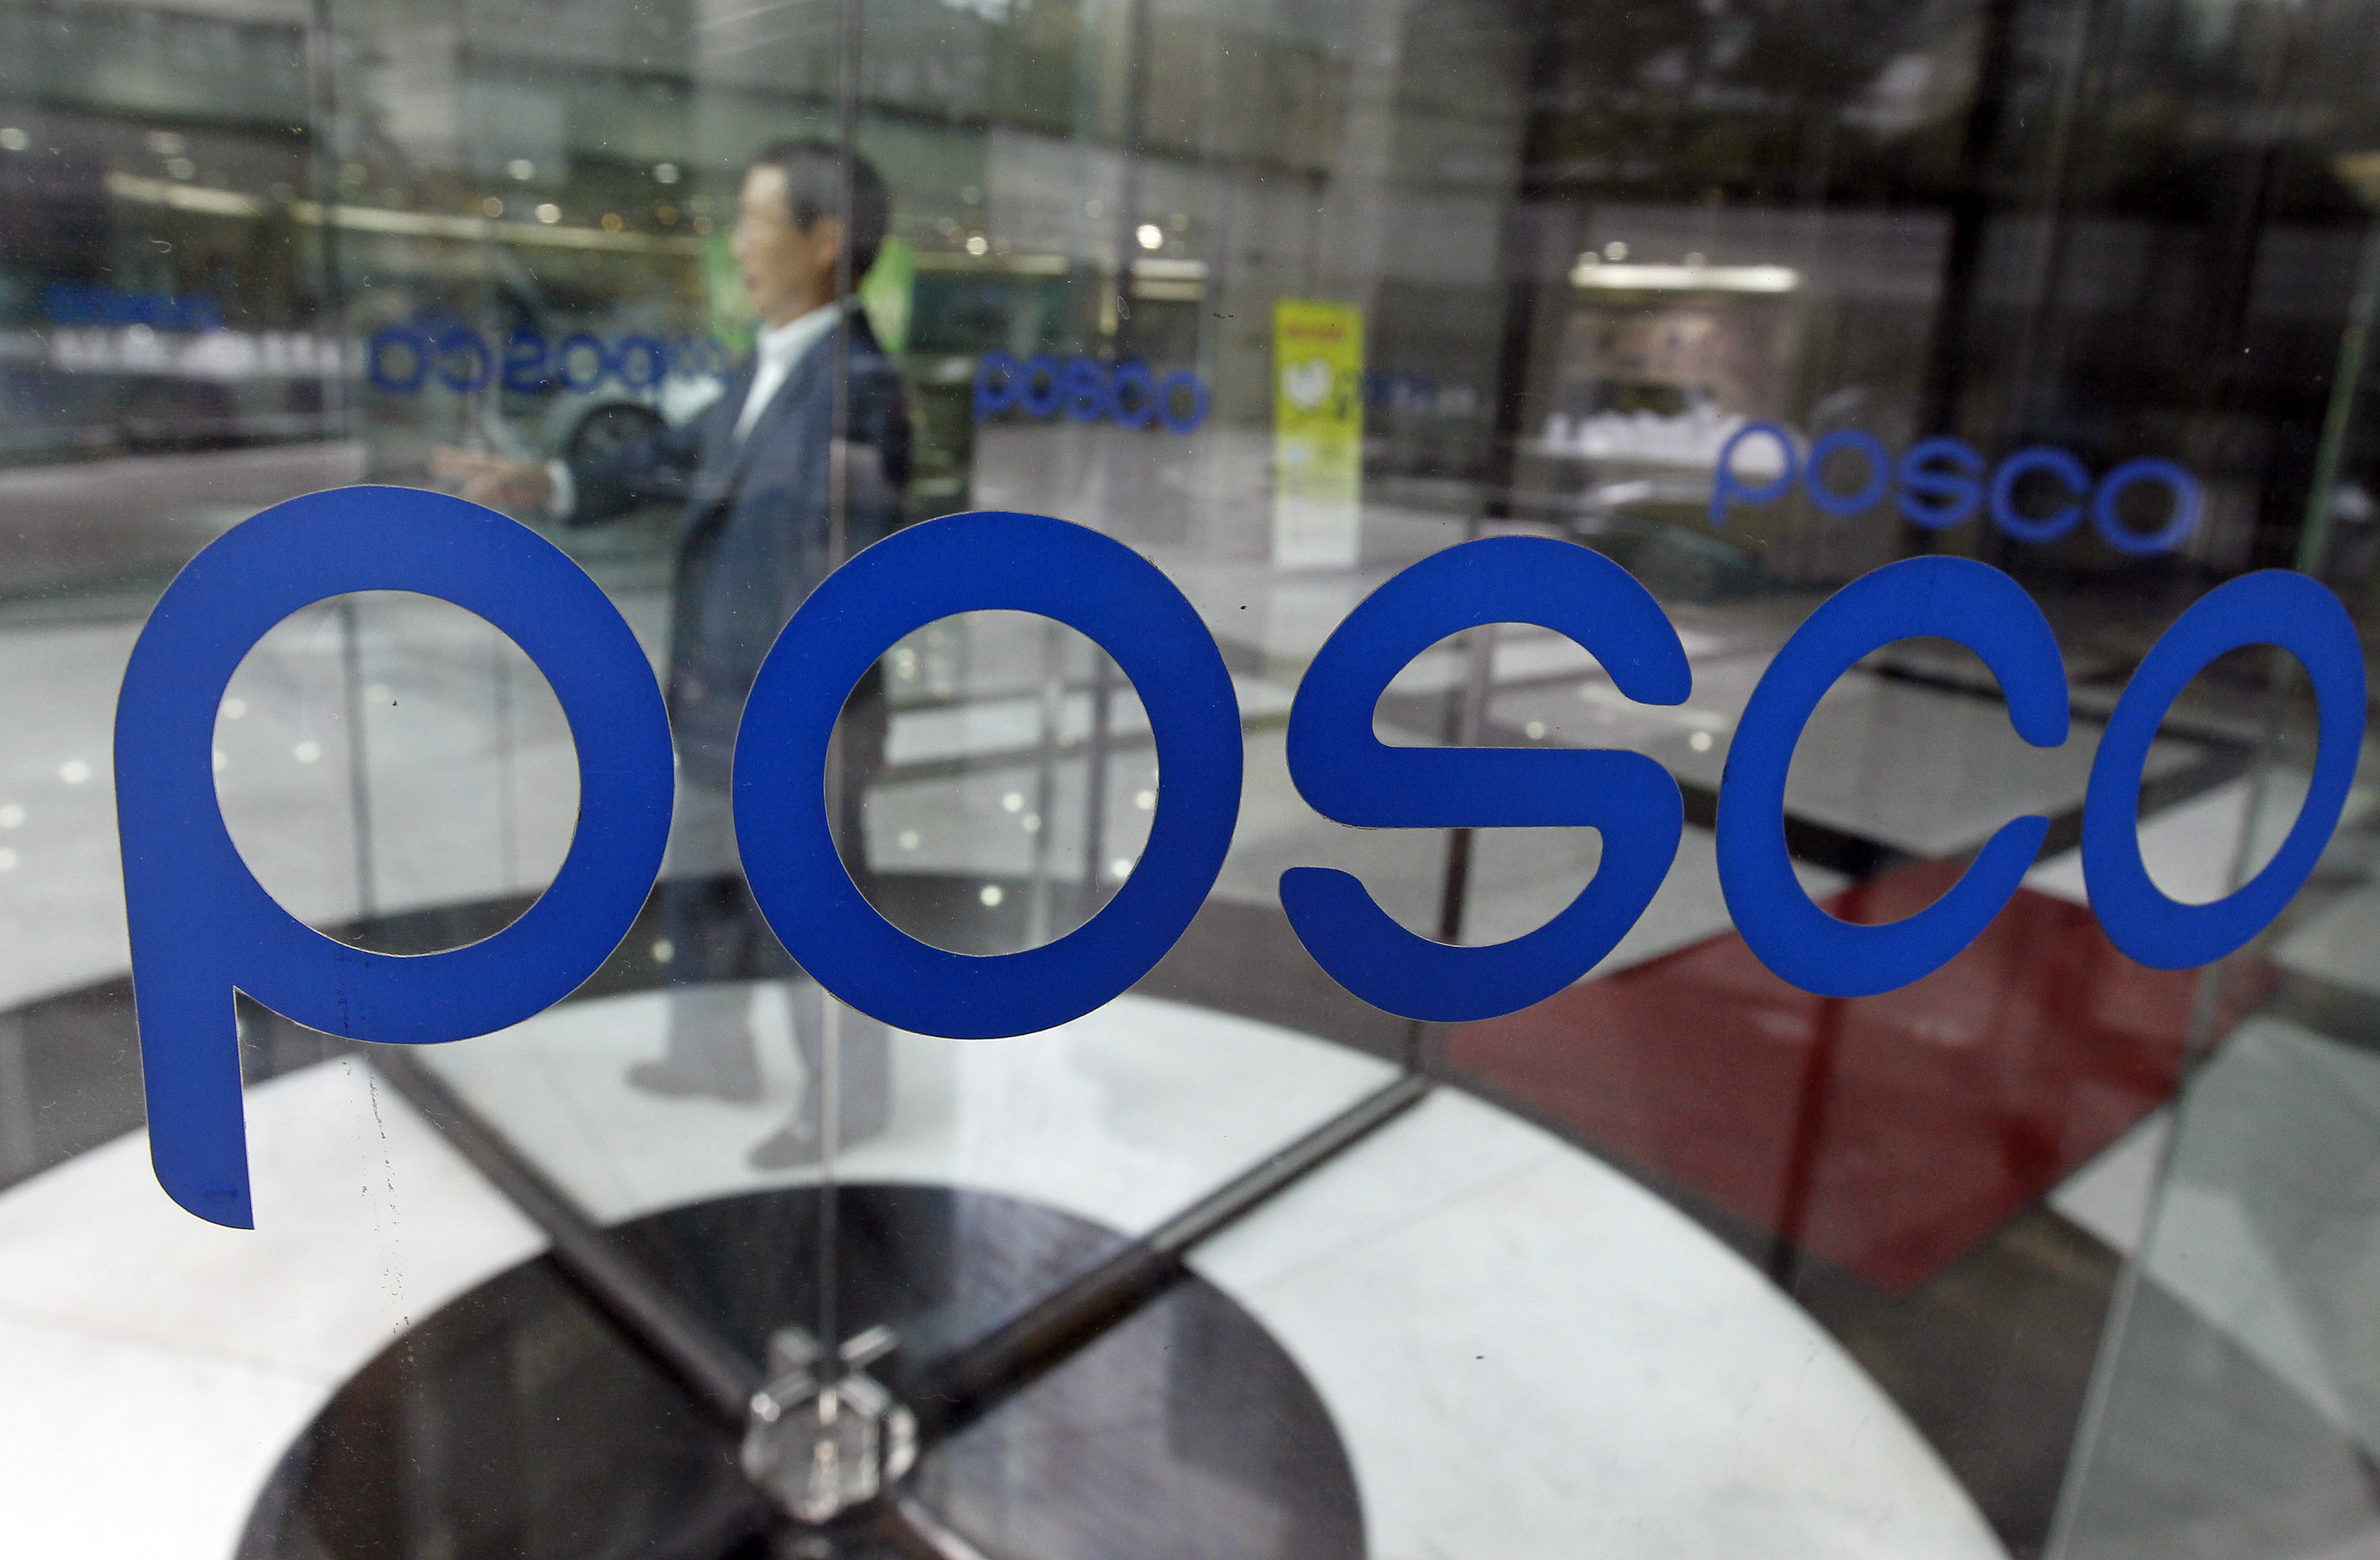 South Korea's POSCO plans $93 billion of investment by 2030